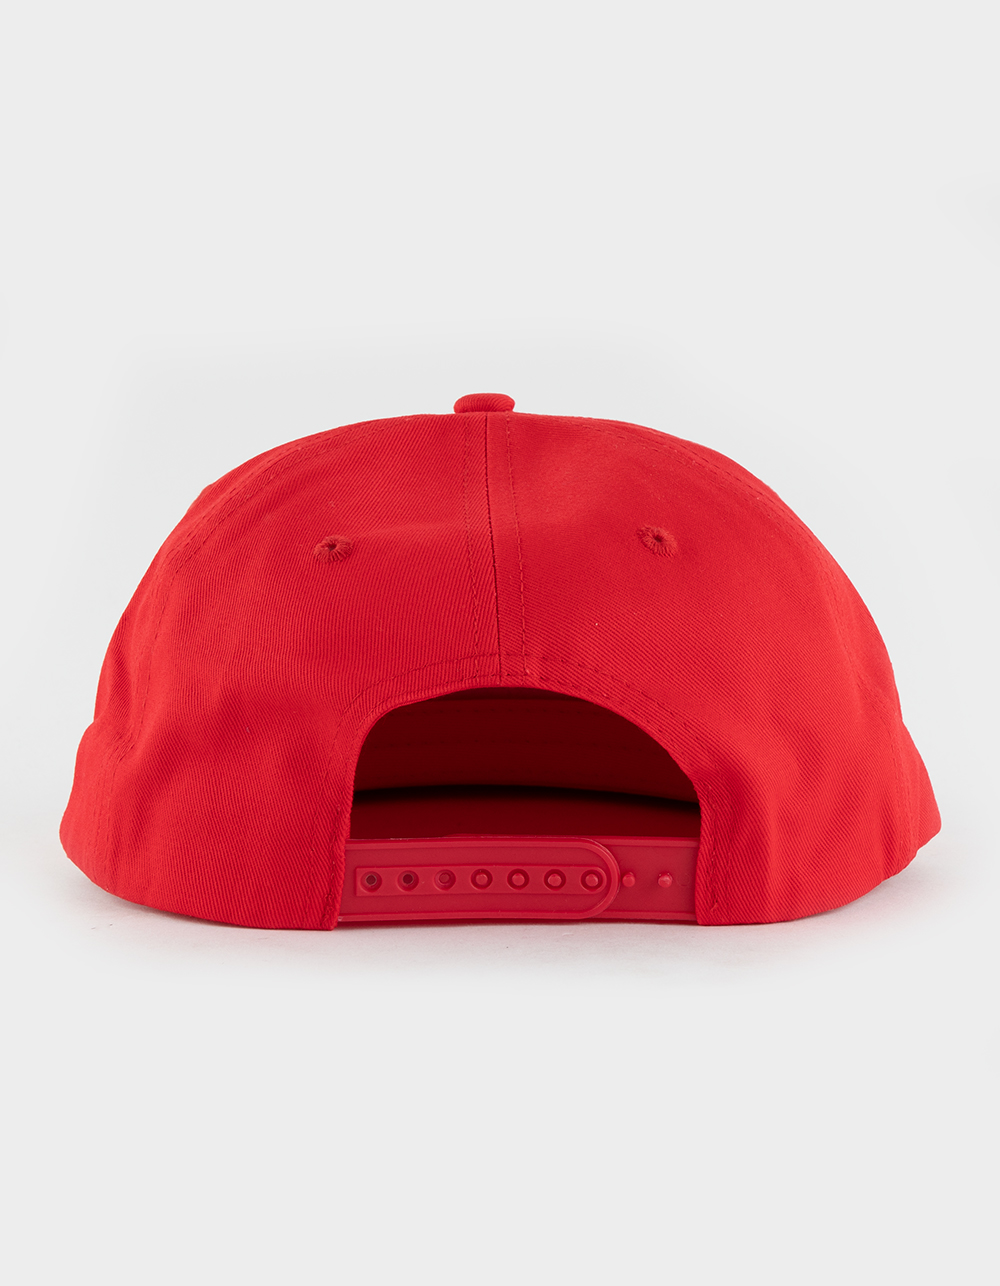 Honda Ace Snapback Hat - Red - One Size